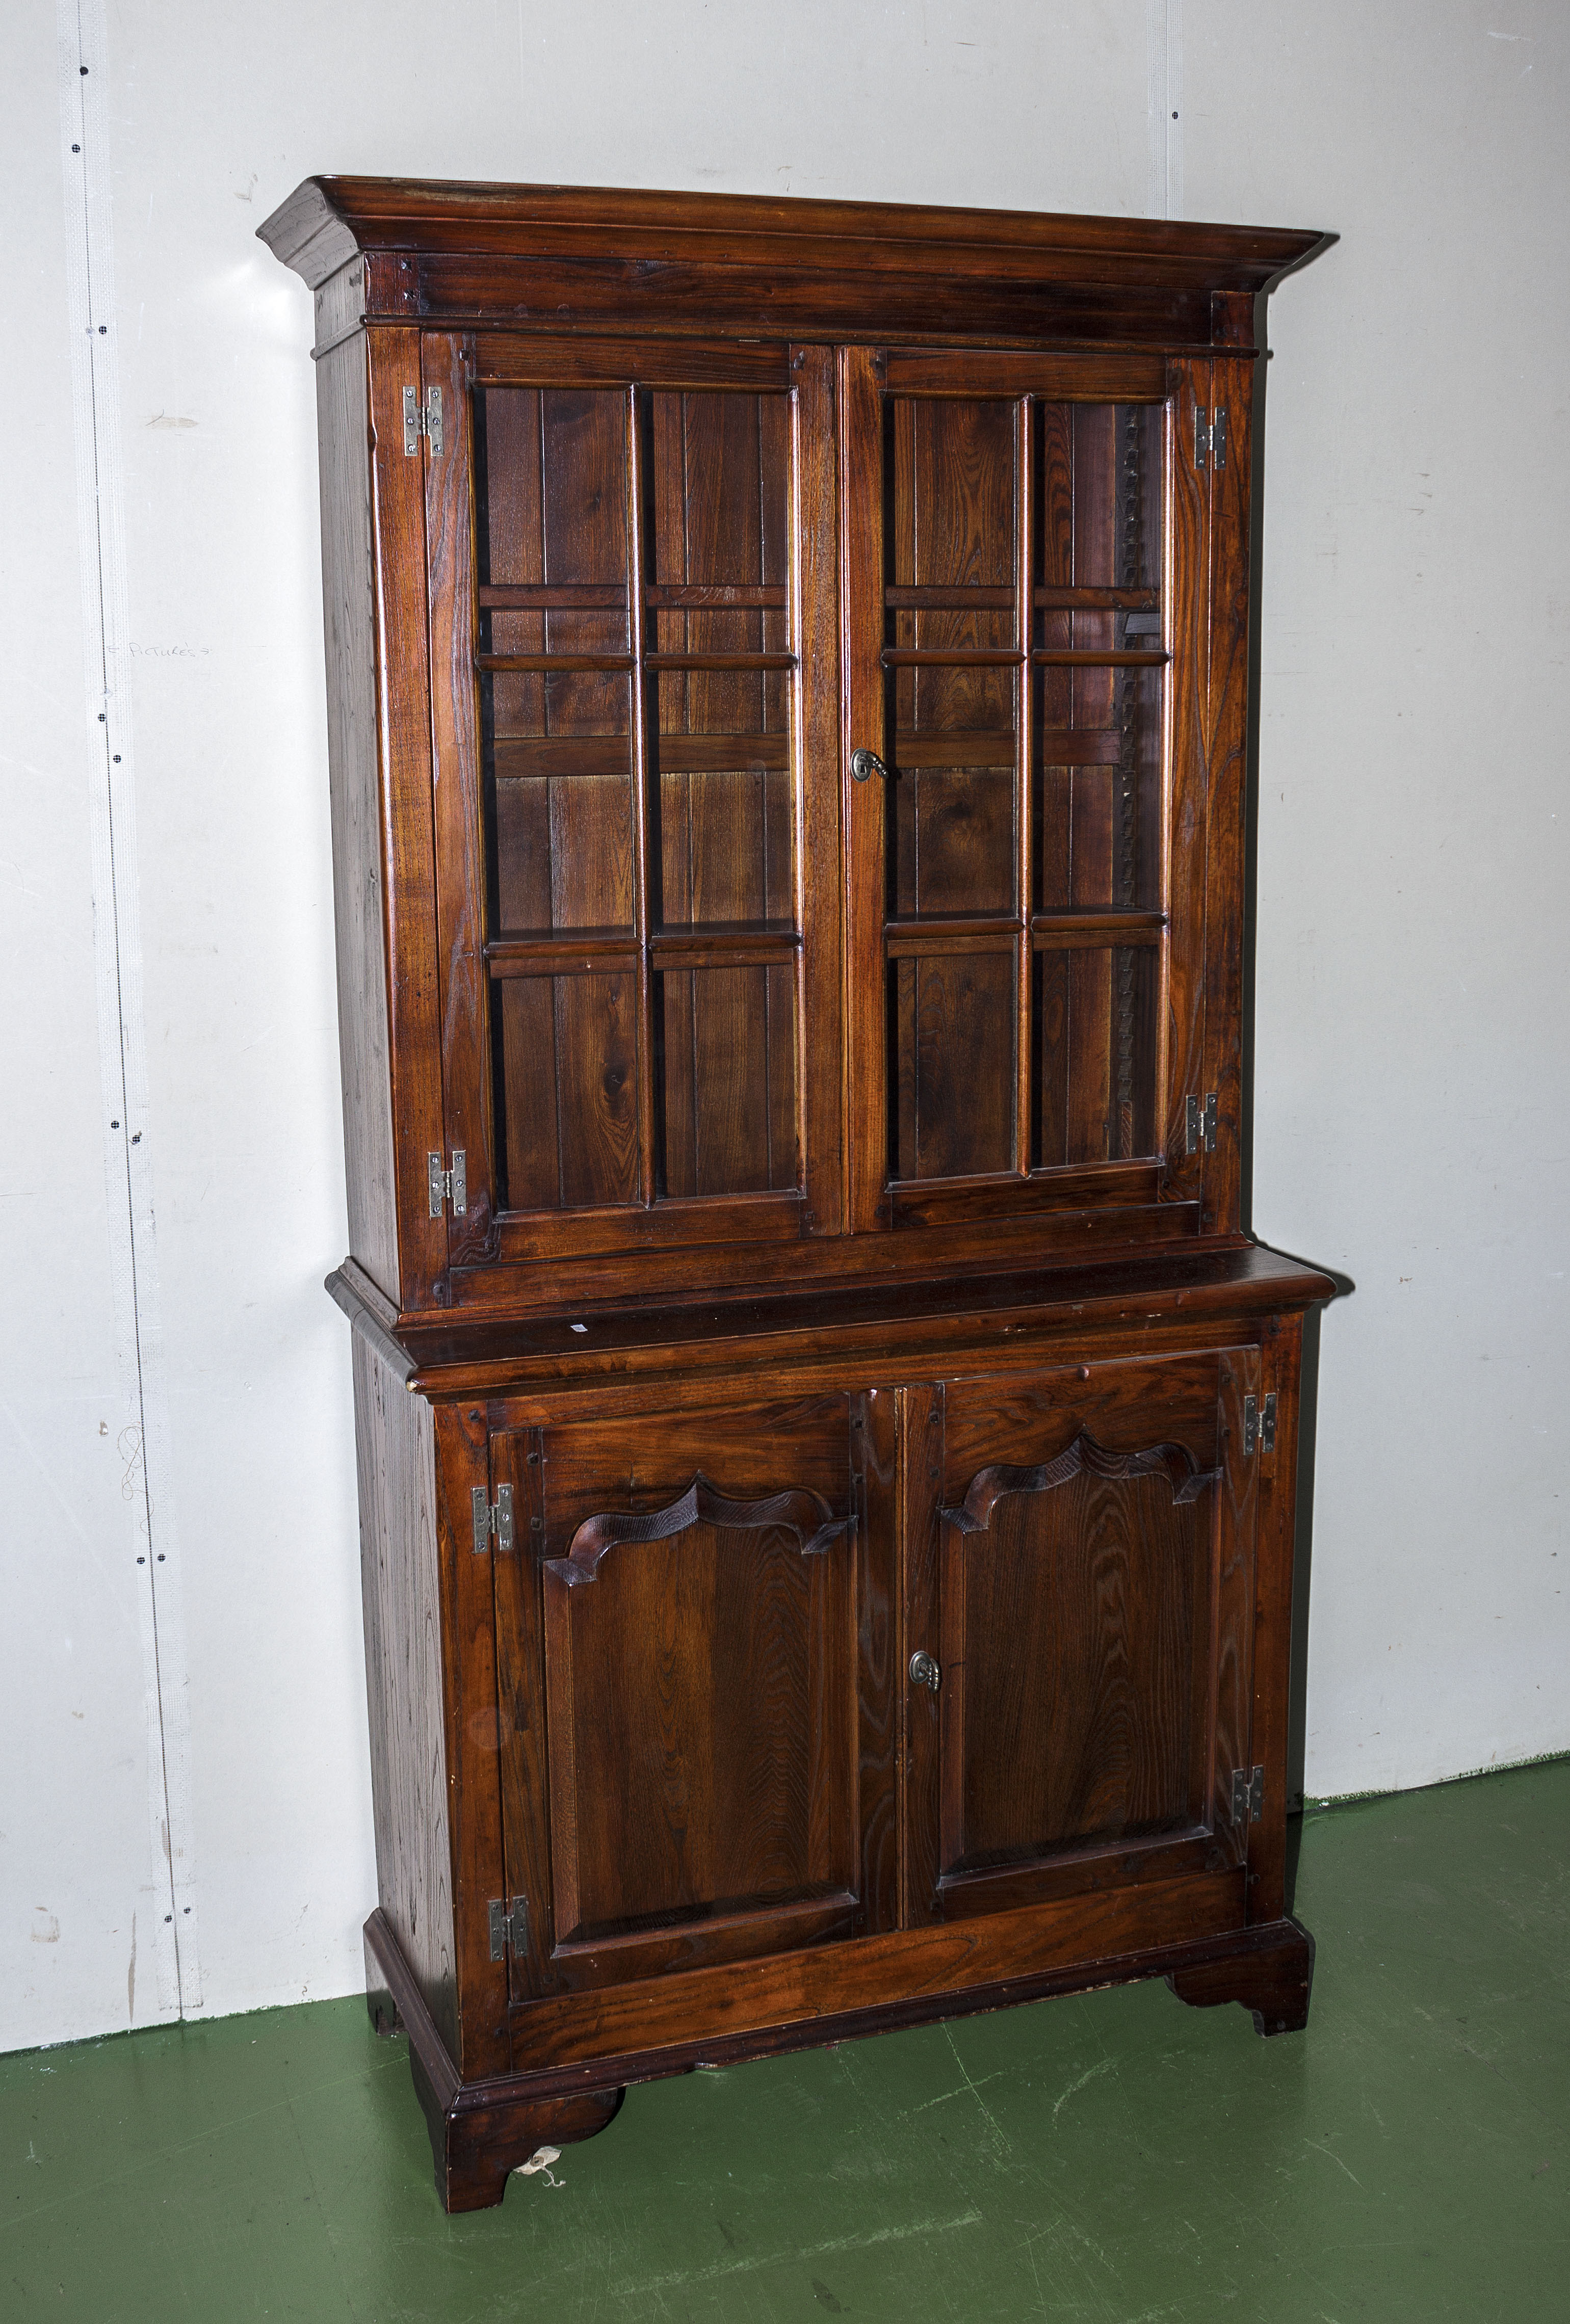 An oak reproduction bookcase on cupboard